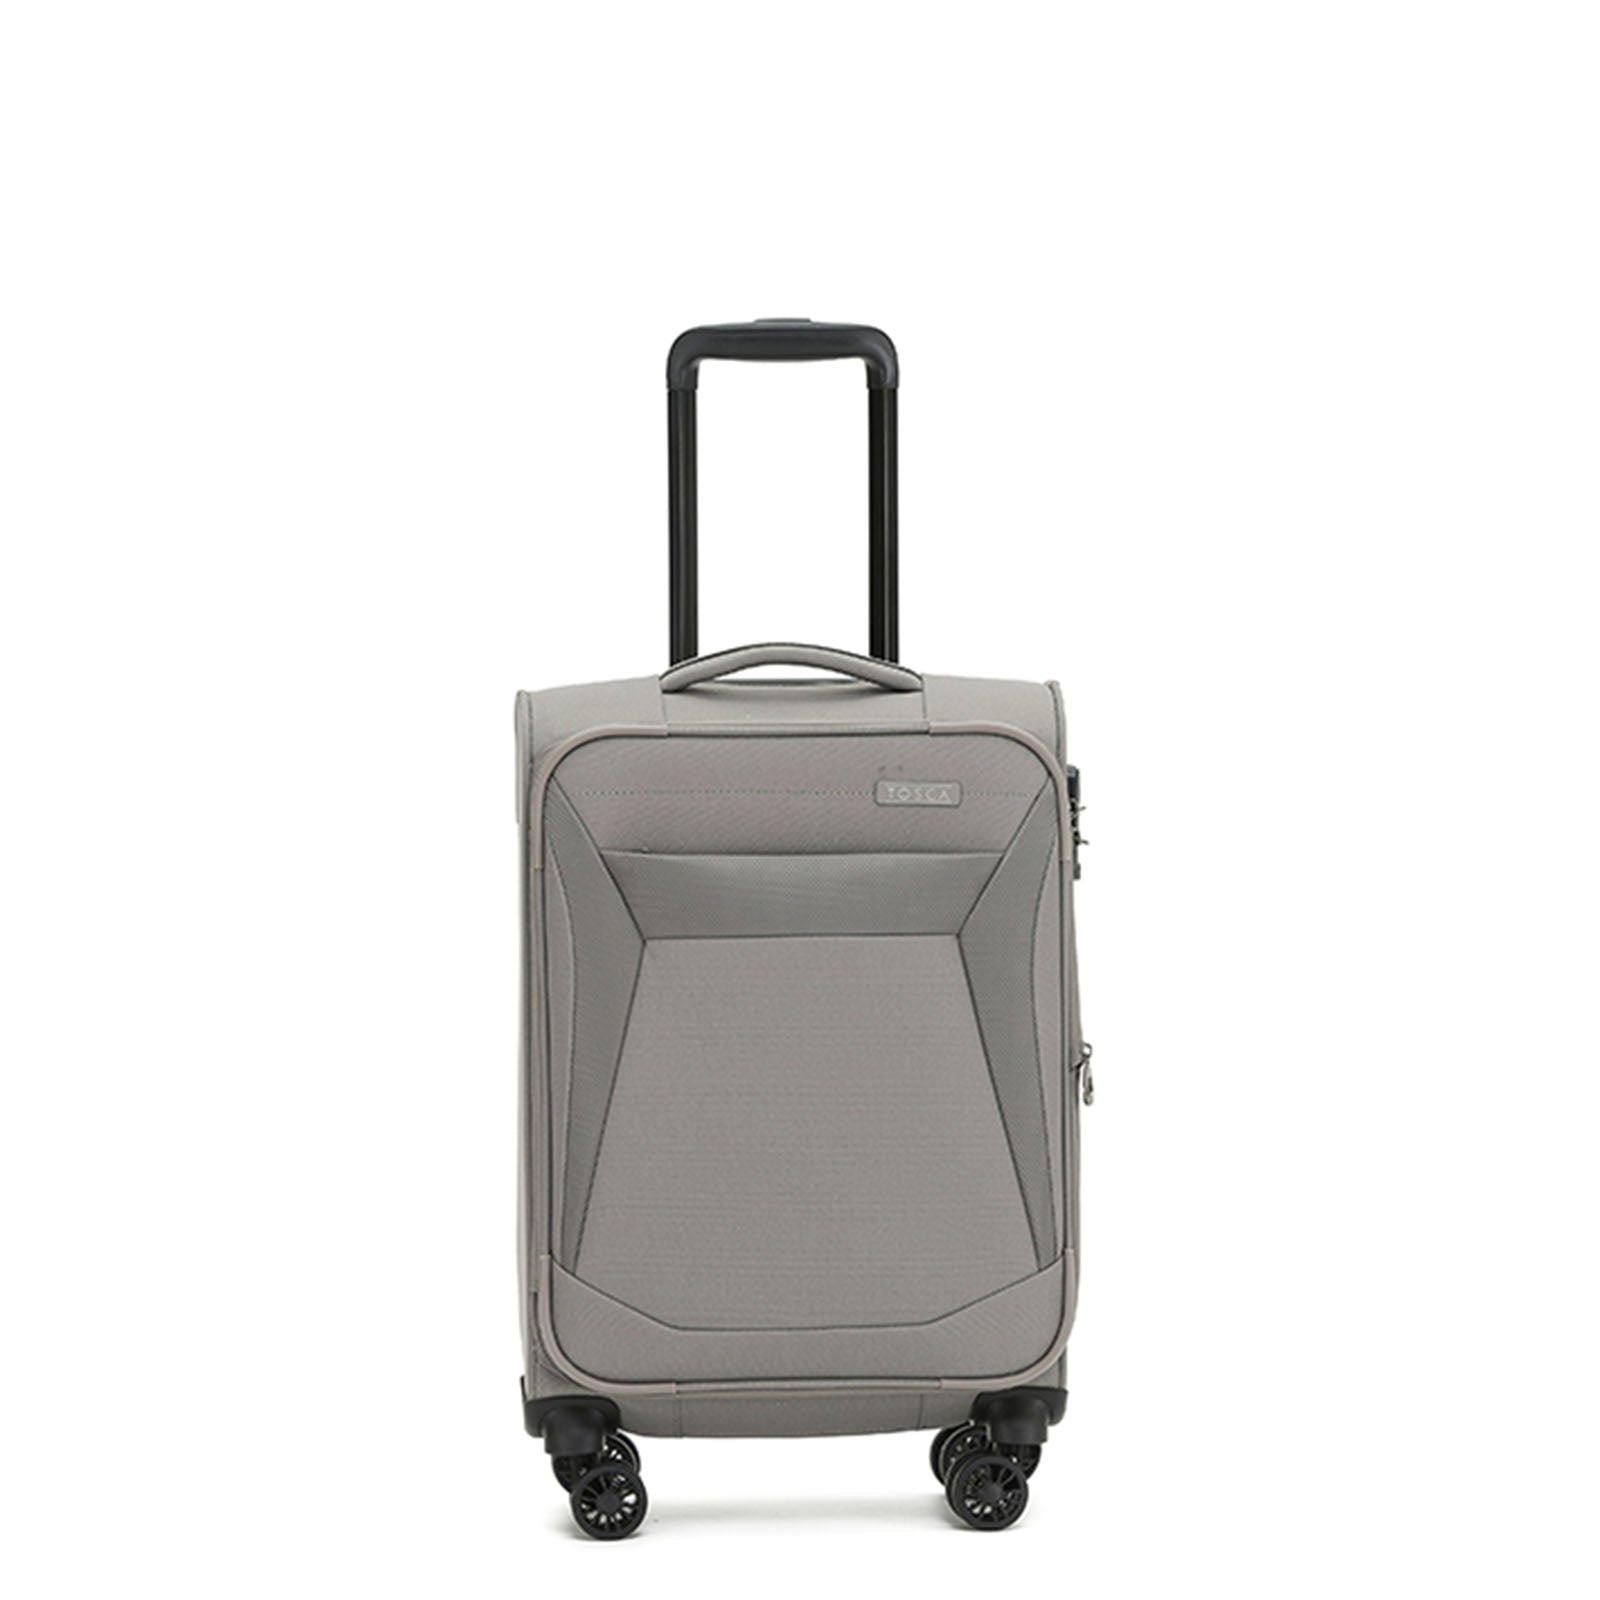 Tosca-Aviator-4-Wheel-Carry-On-Suitcase-Khaki-Front